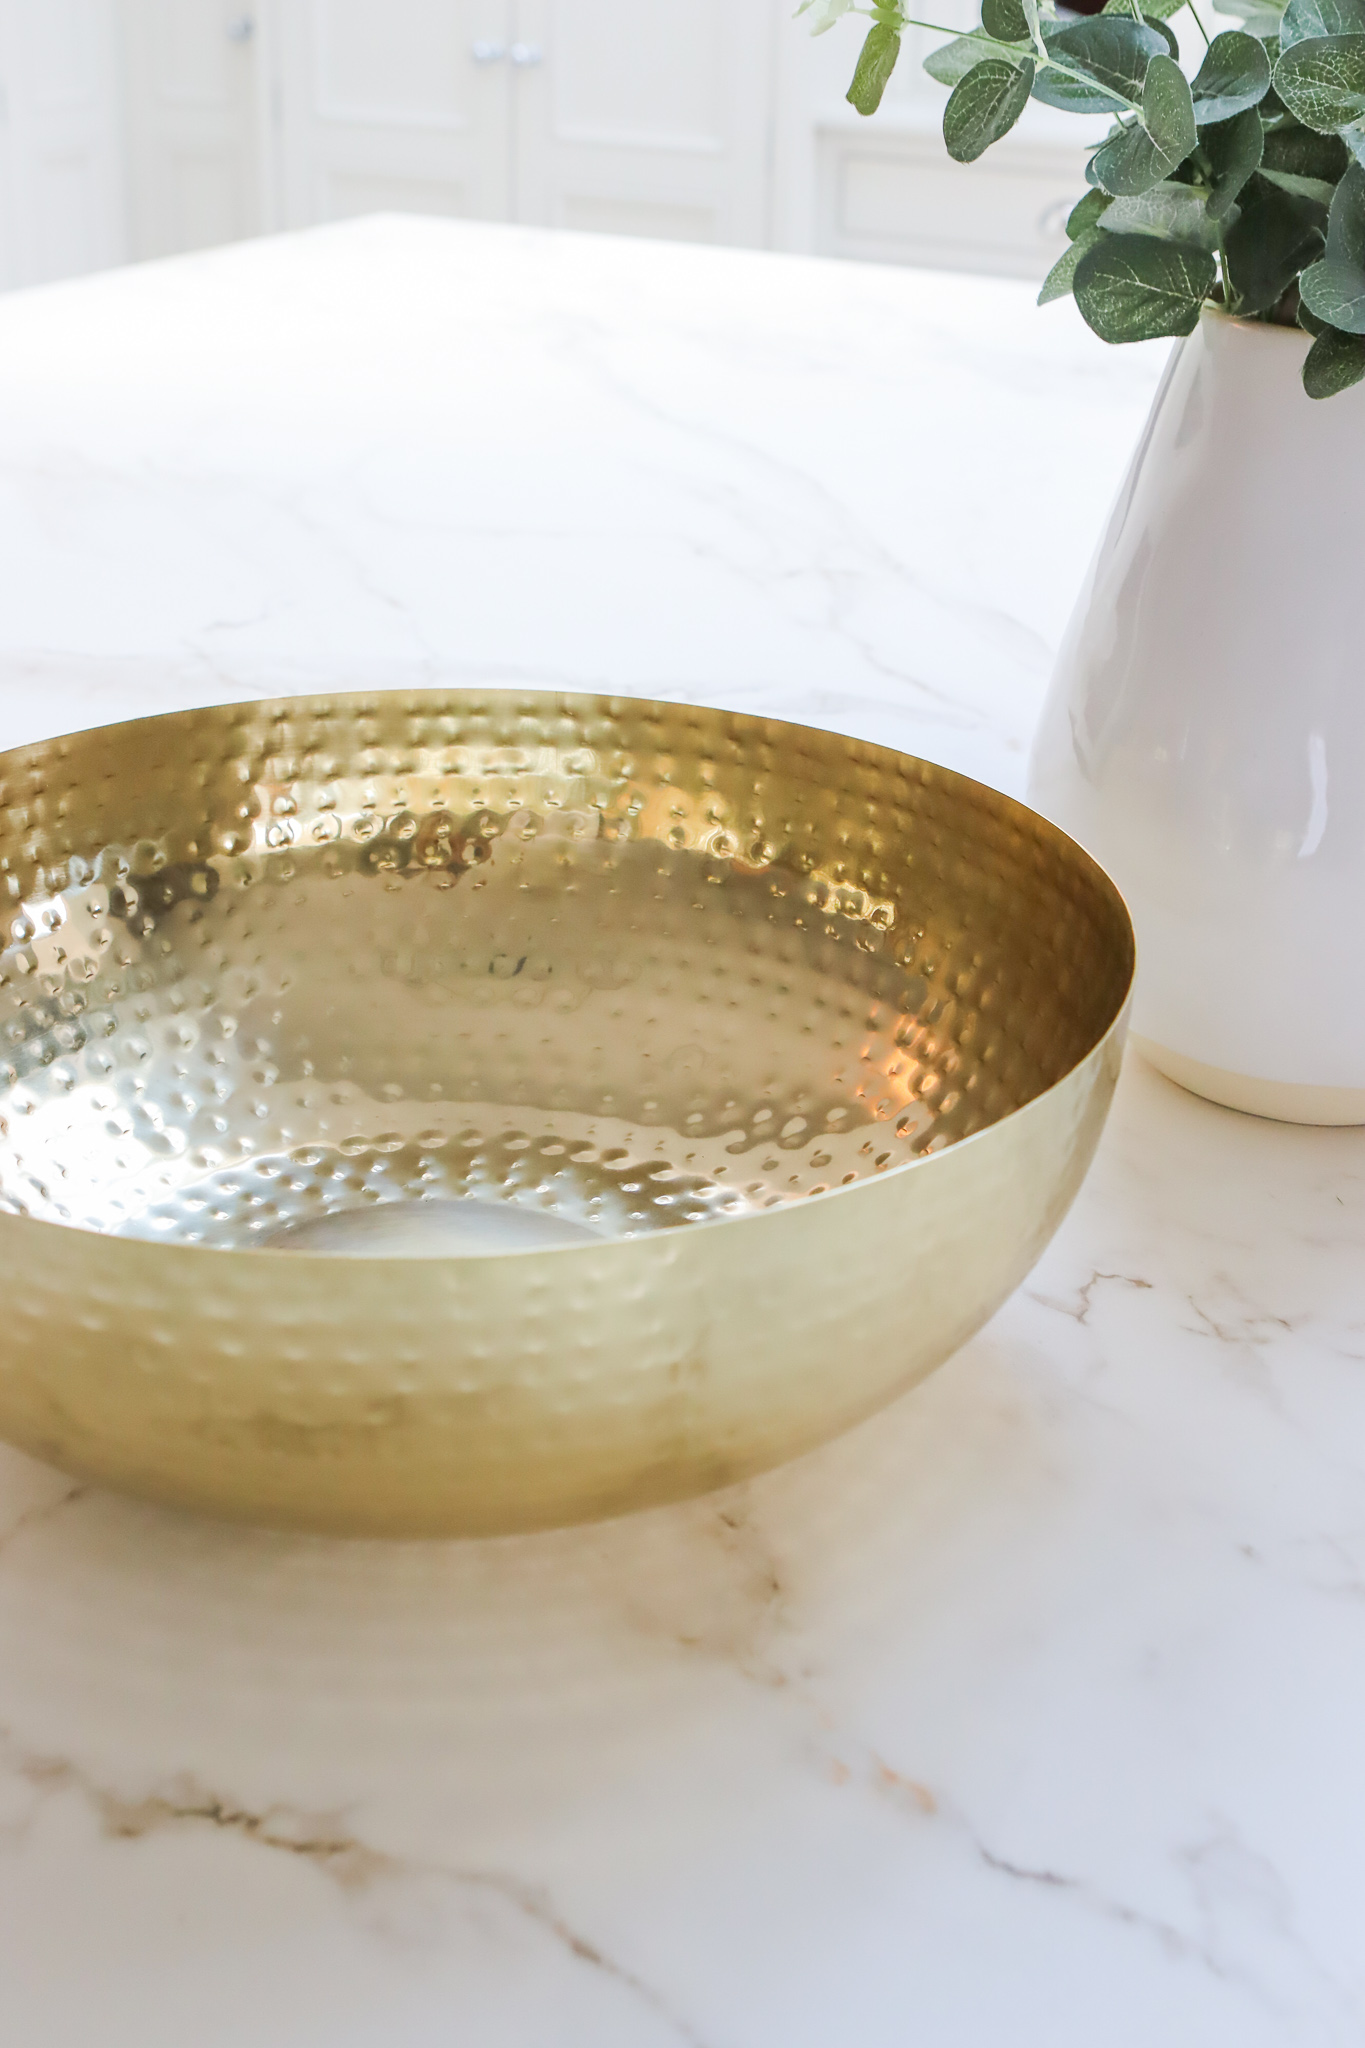 camille gold serving bowl